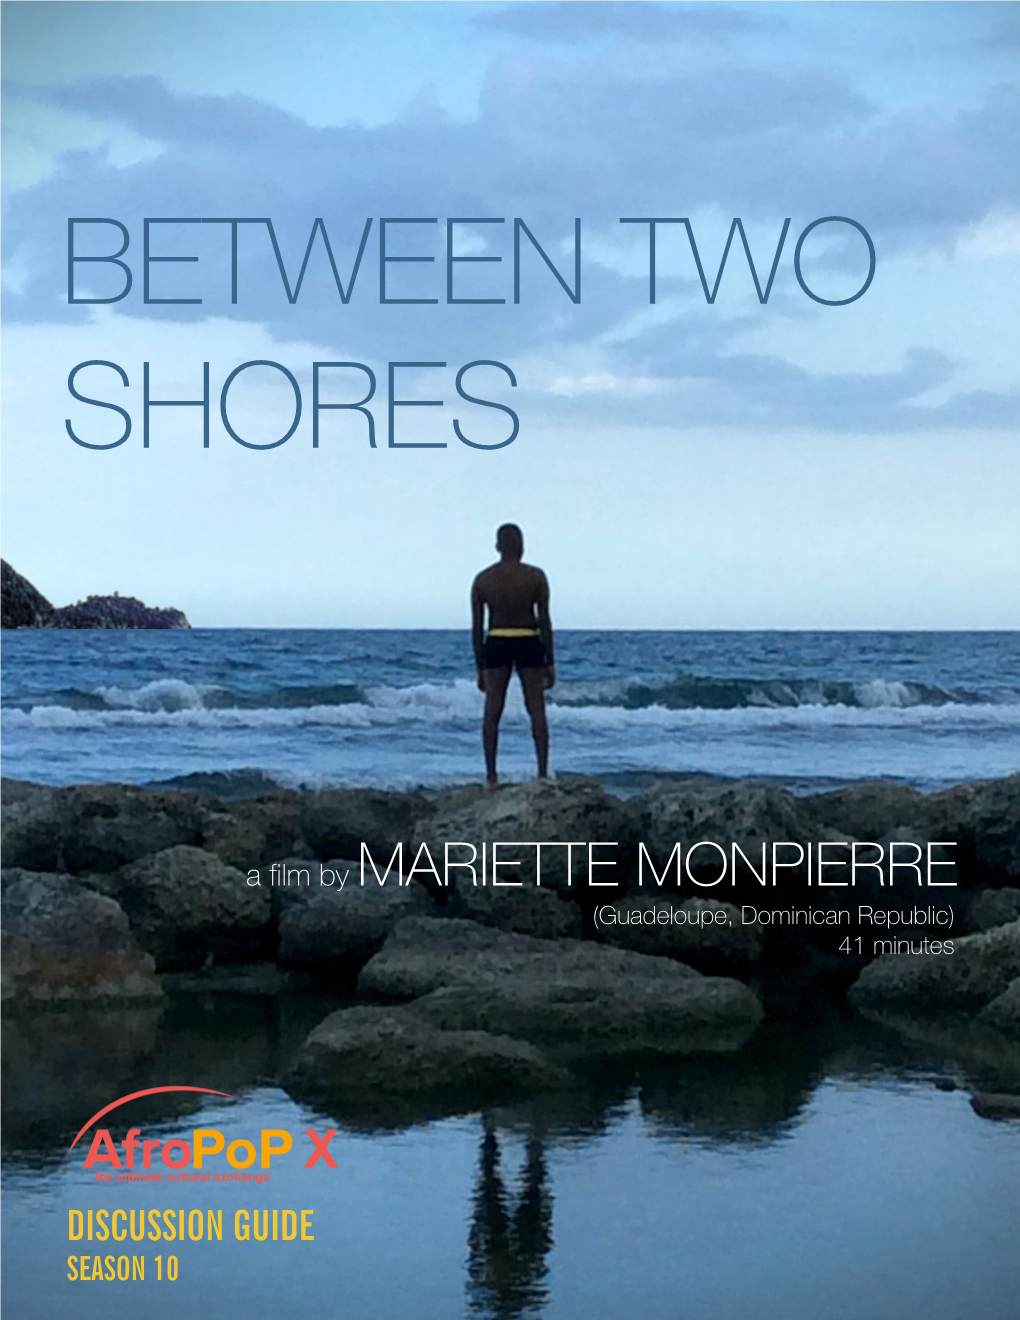 A Film by MARIETTE MONPIERRE (Guadeloupe, Dominican Republic) 41 Minutes